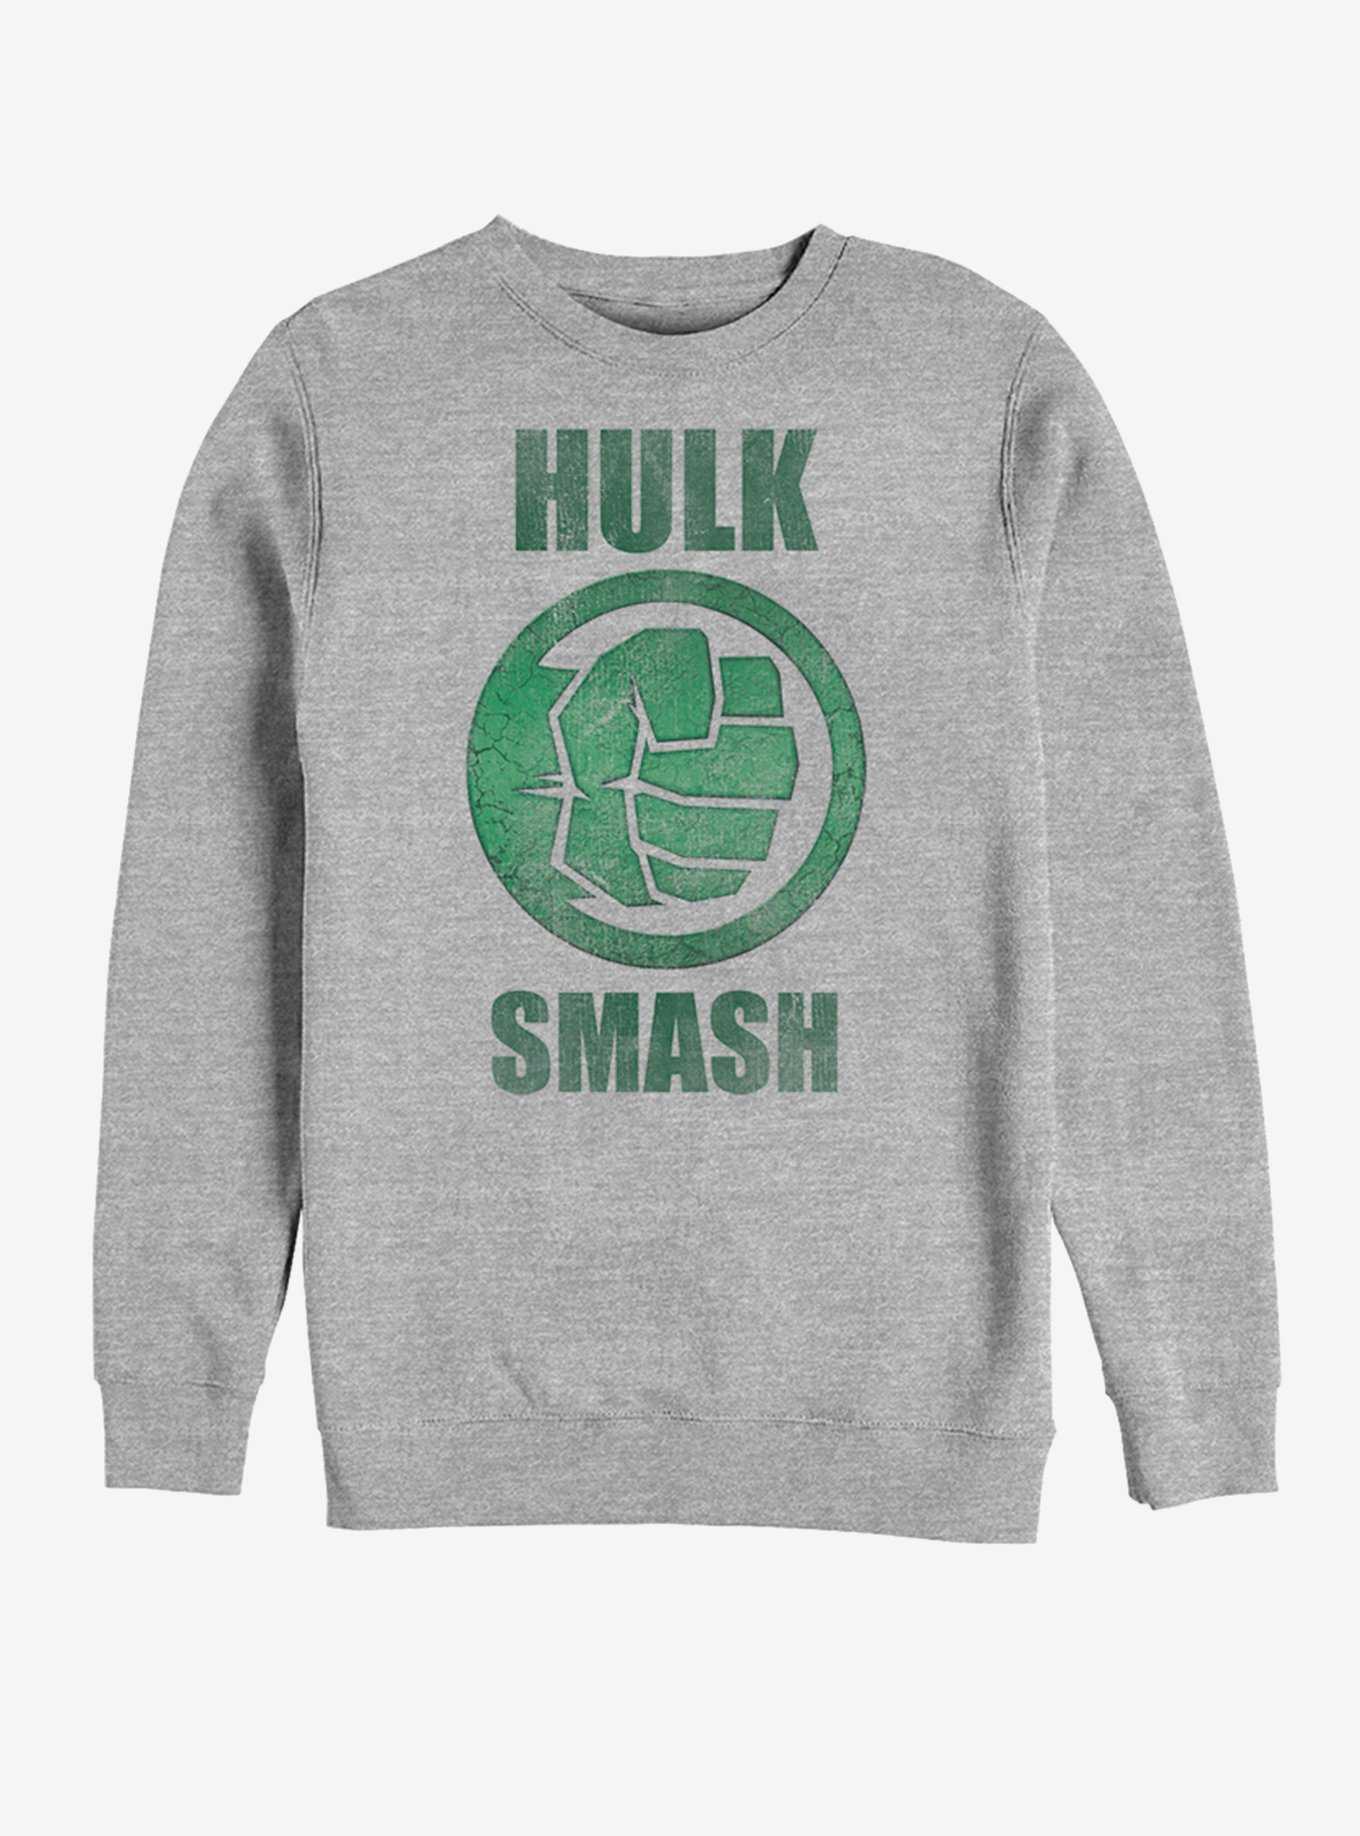 Marvel Hulk Smash Sweatshirt, , hi-res